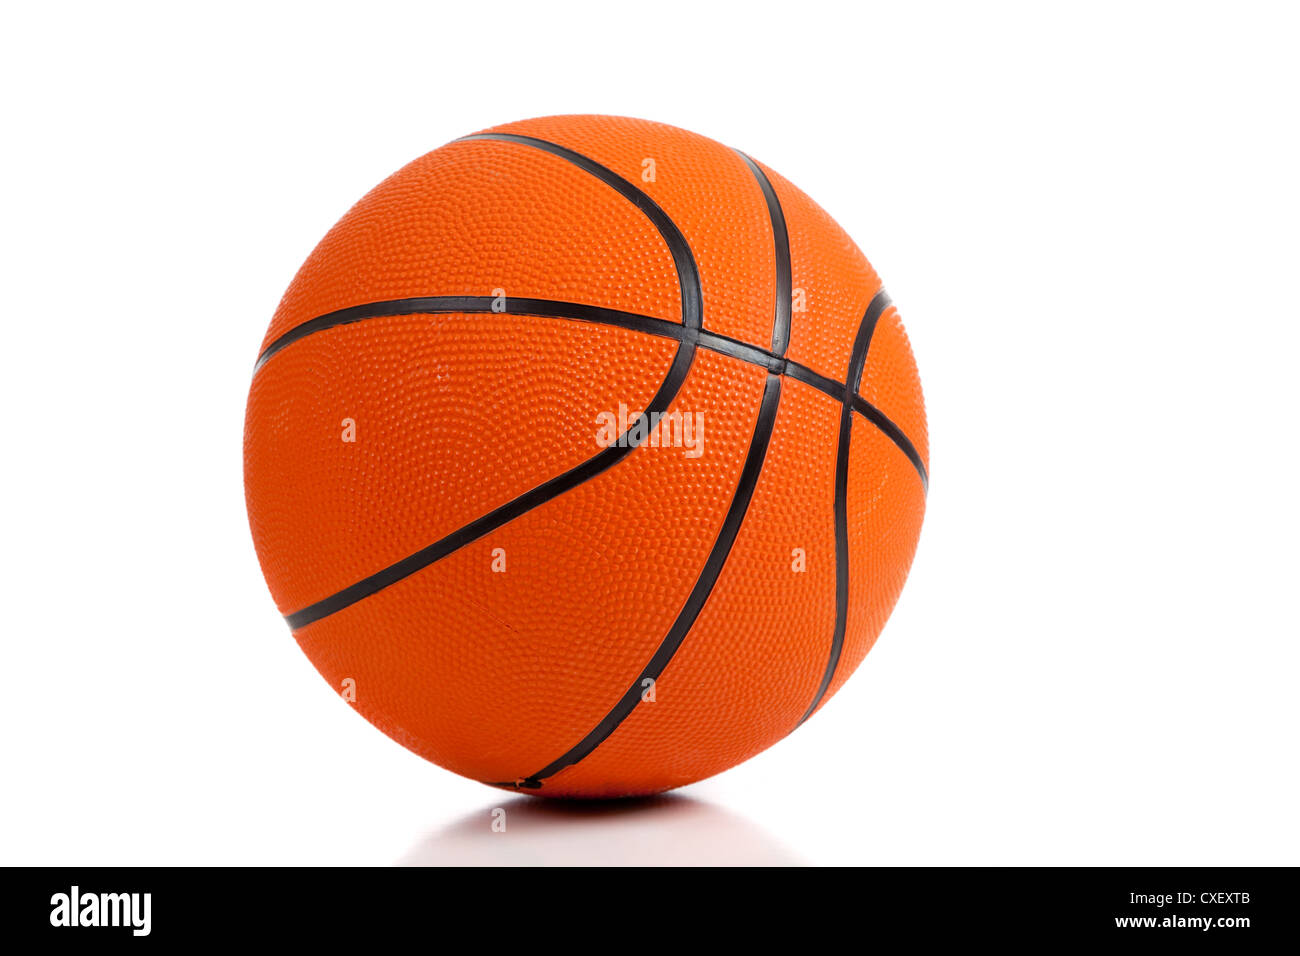 La pallacanestro su sfondo bianco Foto Stock